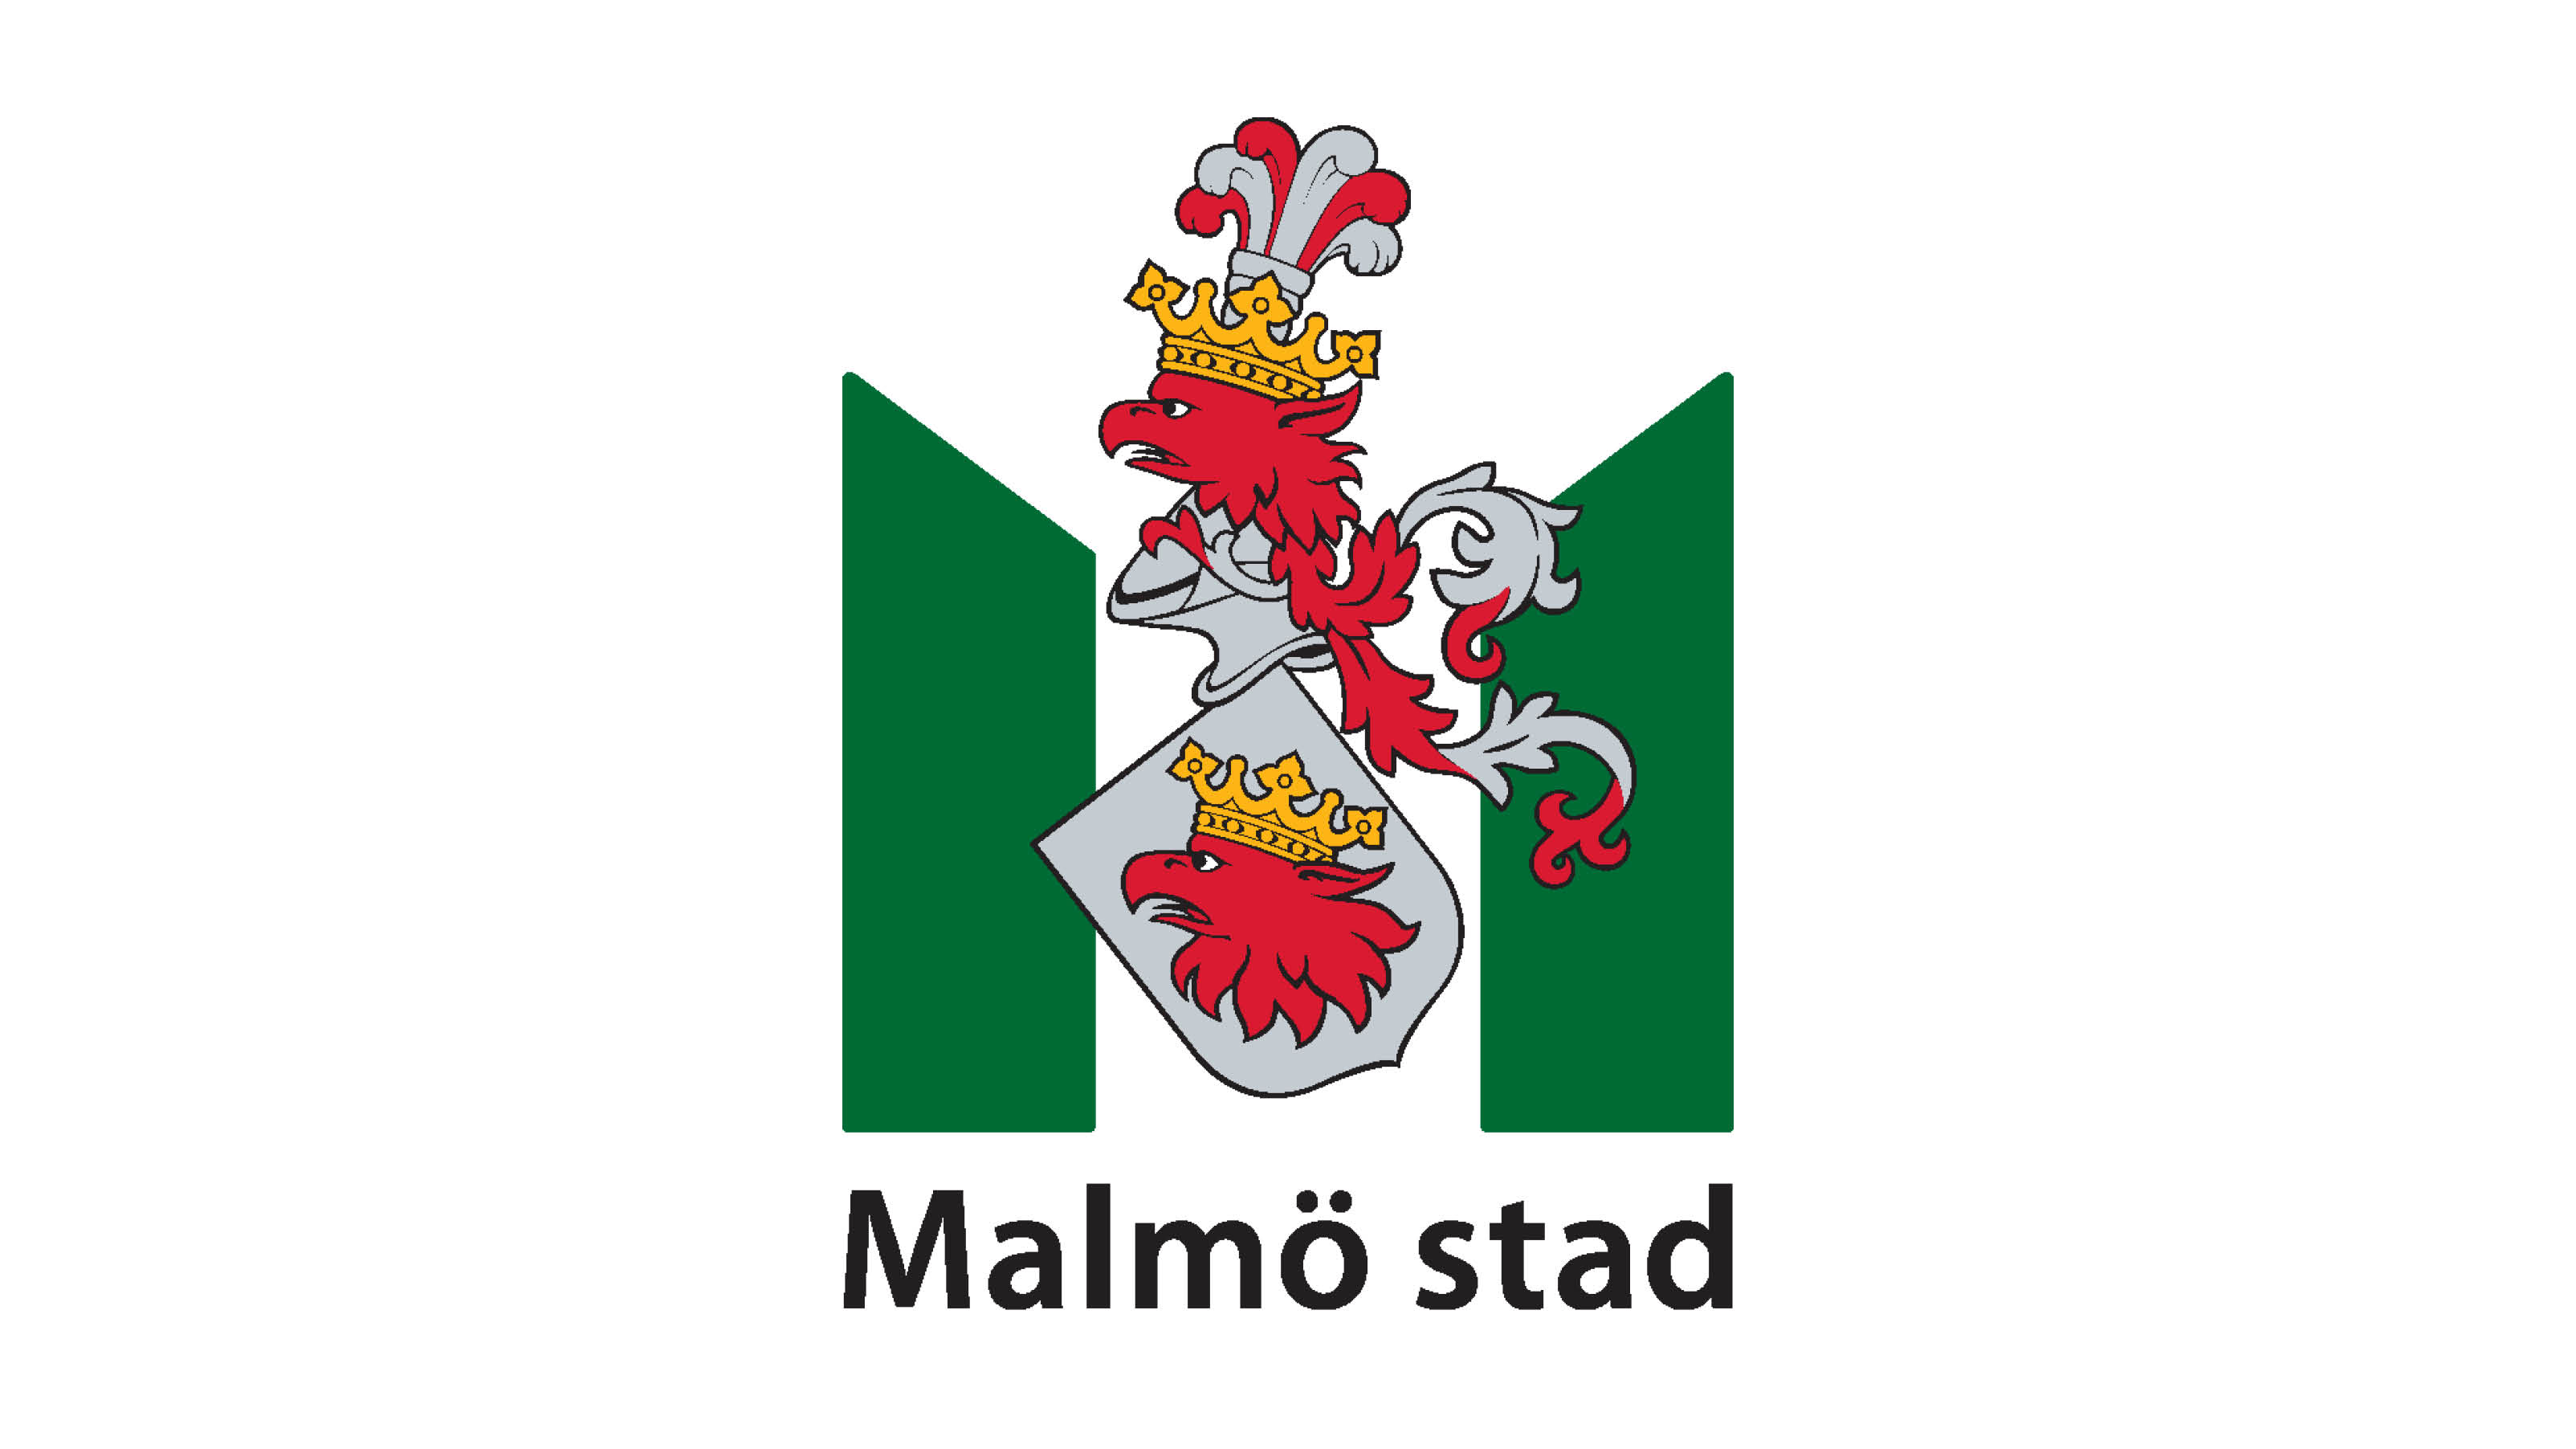 City of Malmo logotype with text Malmö stad